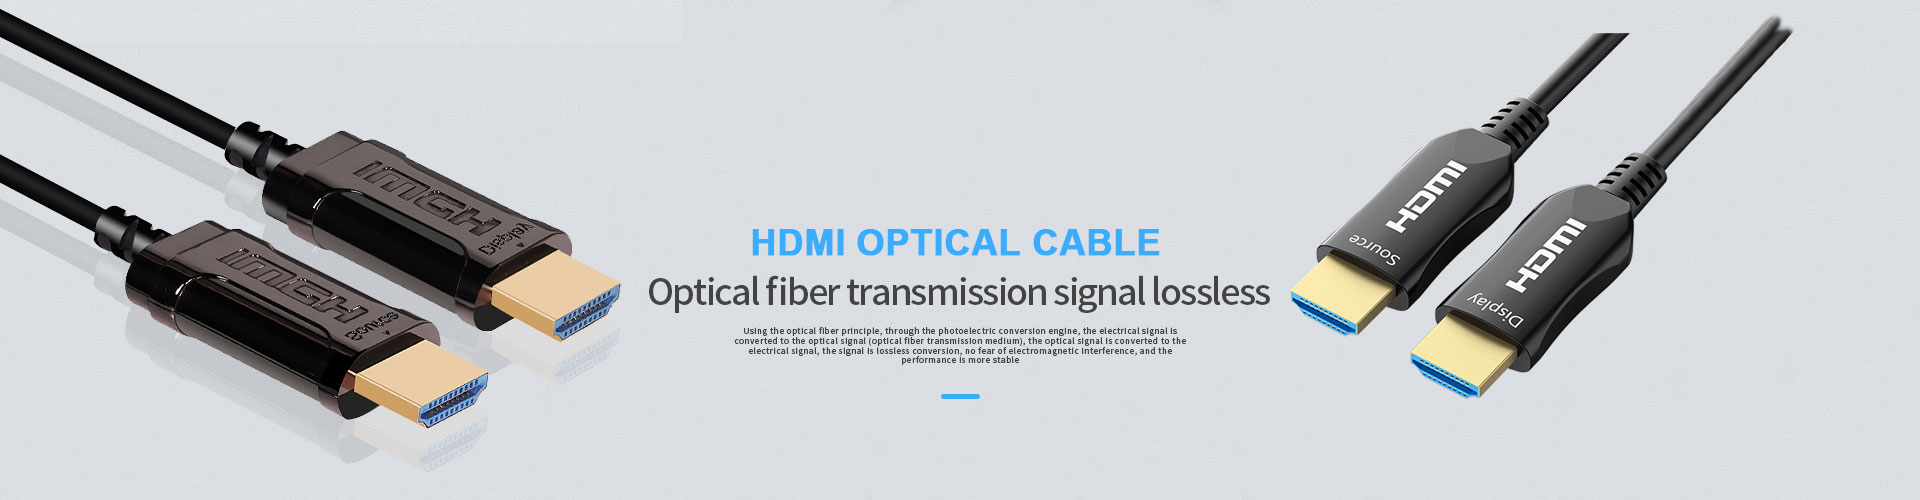 连云港Fiber HDMI